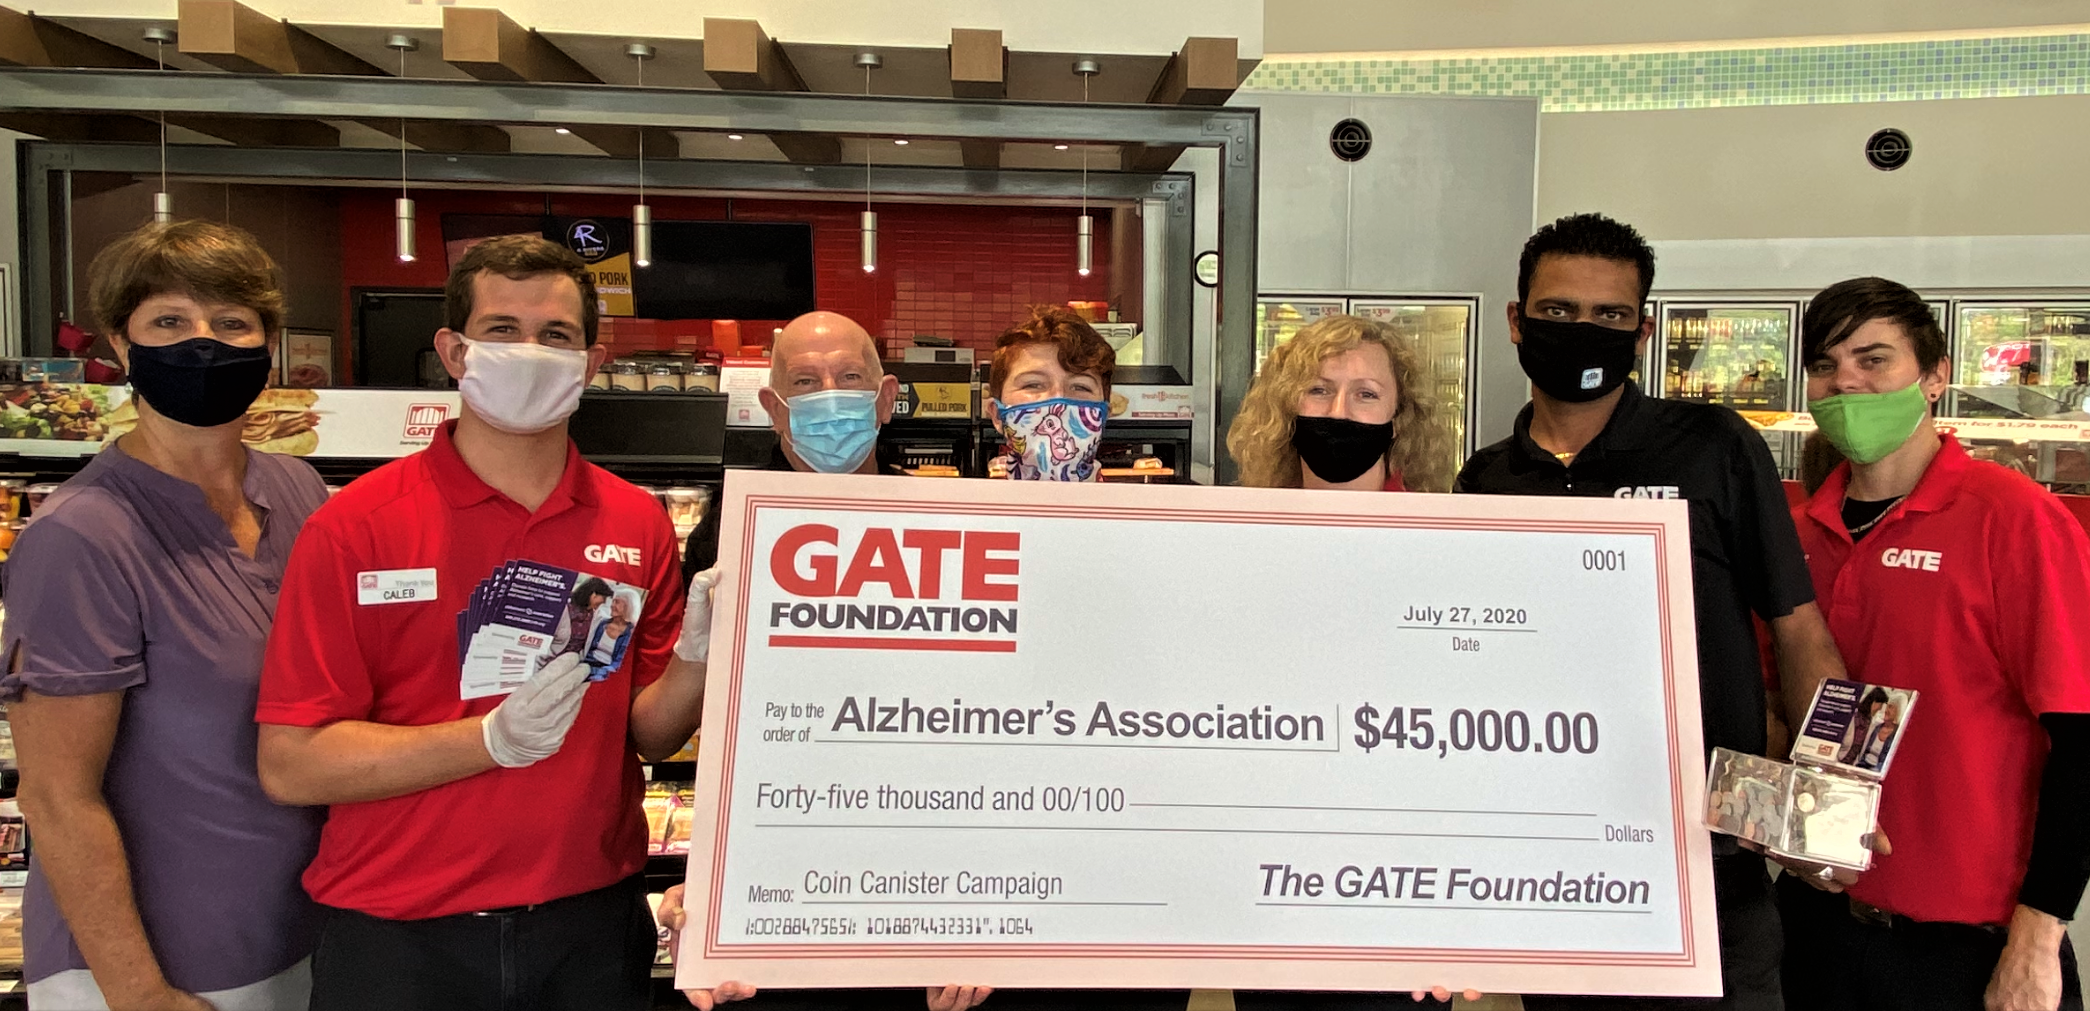 GATE COIN BOX CAMPAIGN RAISES $45,000 FOR ALZHEIMER’S ASSOCIATION